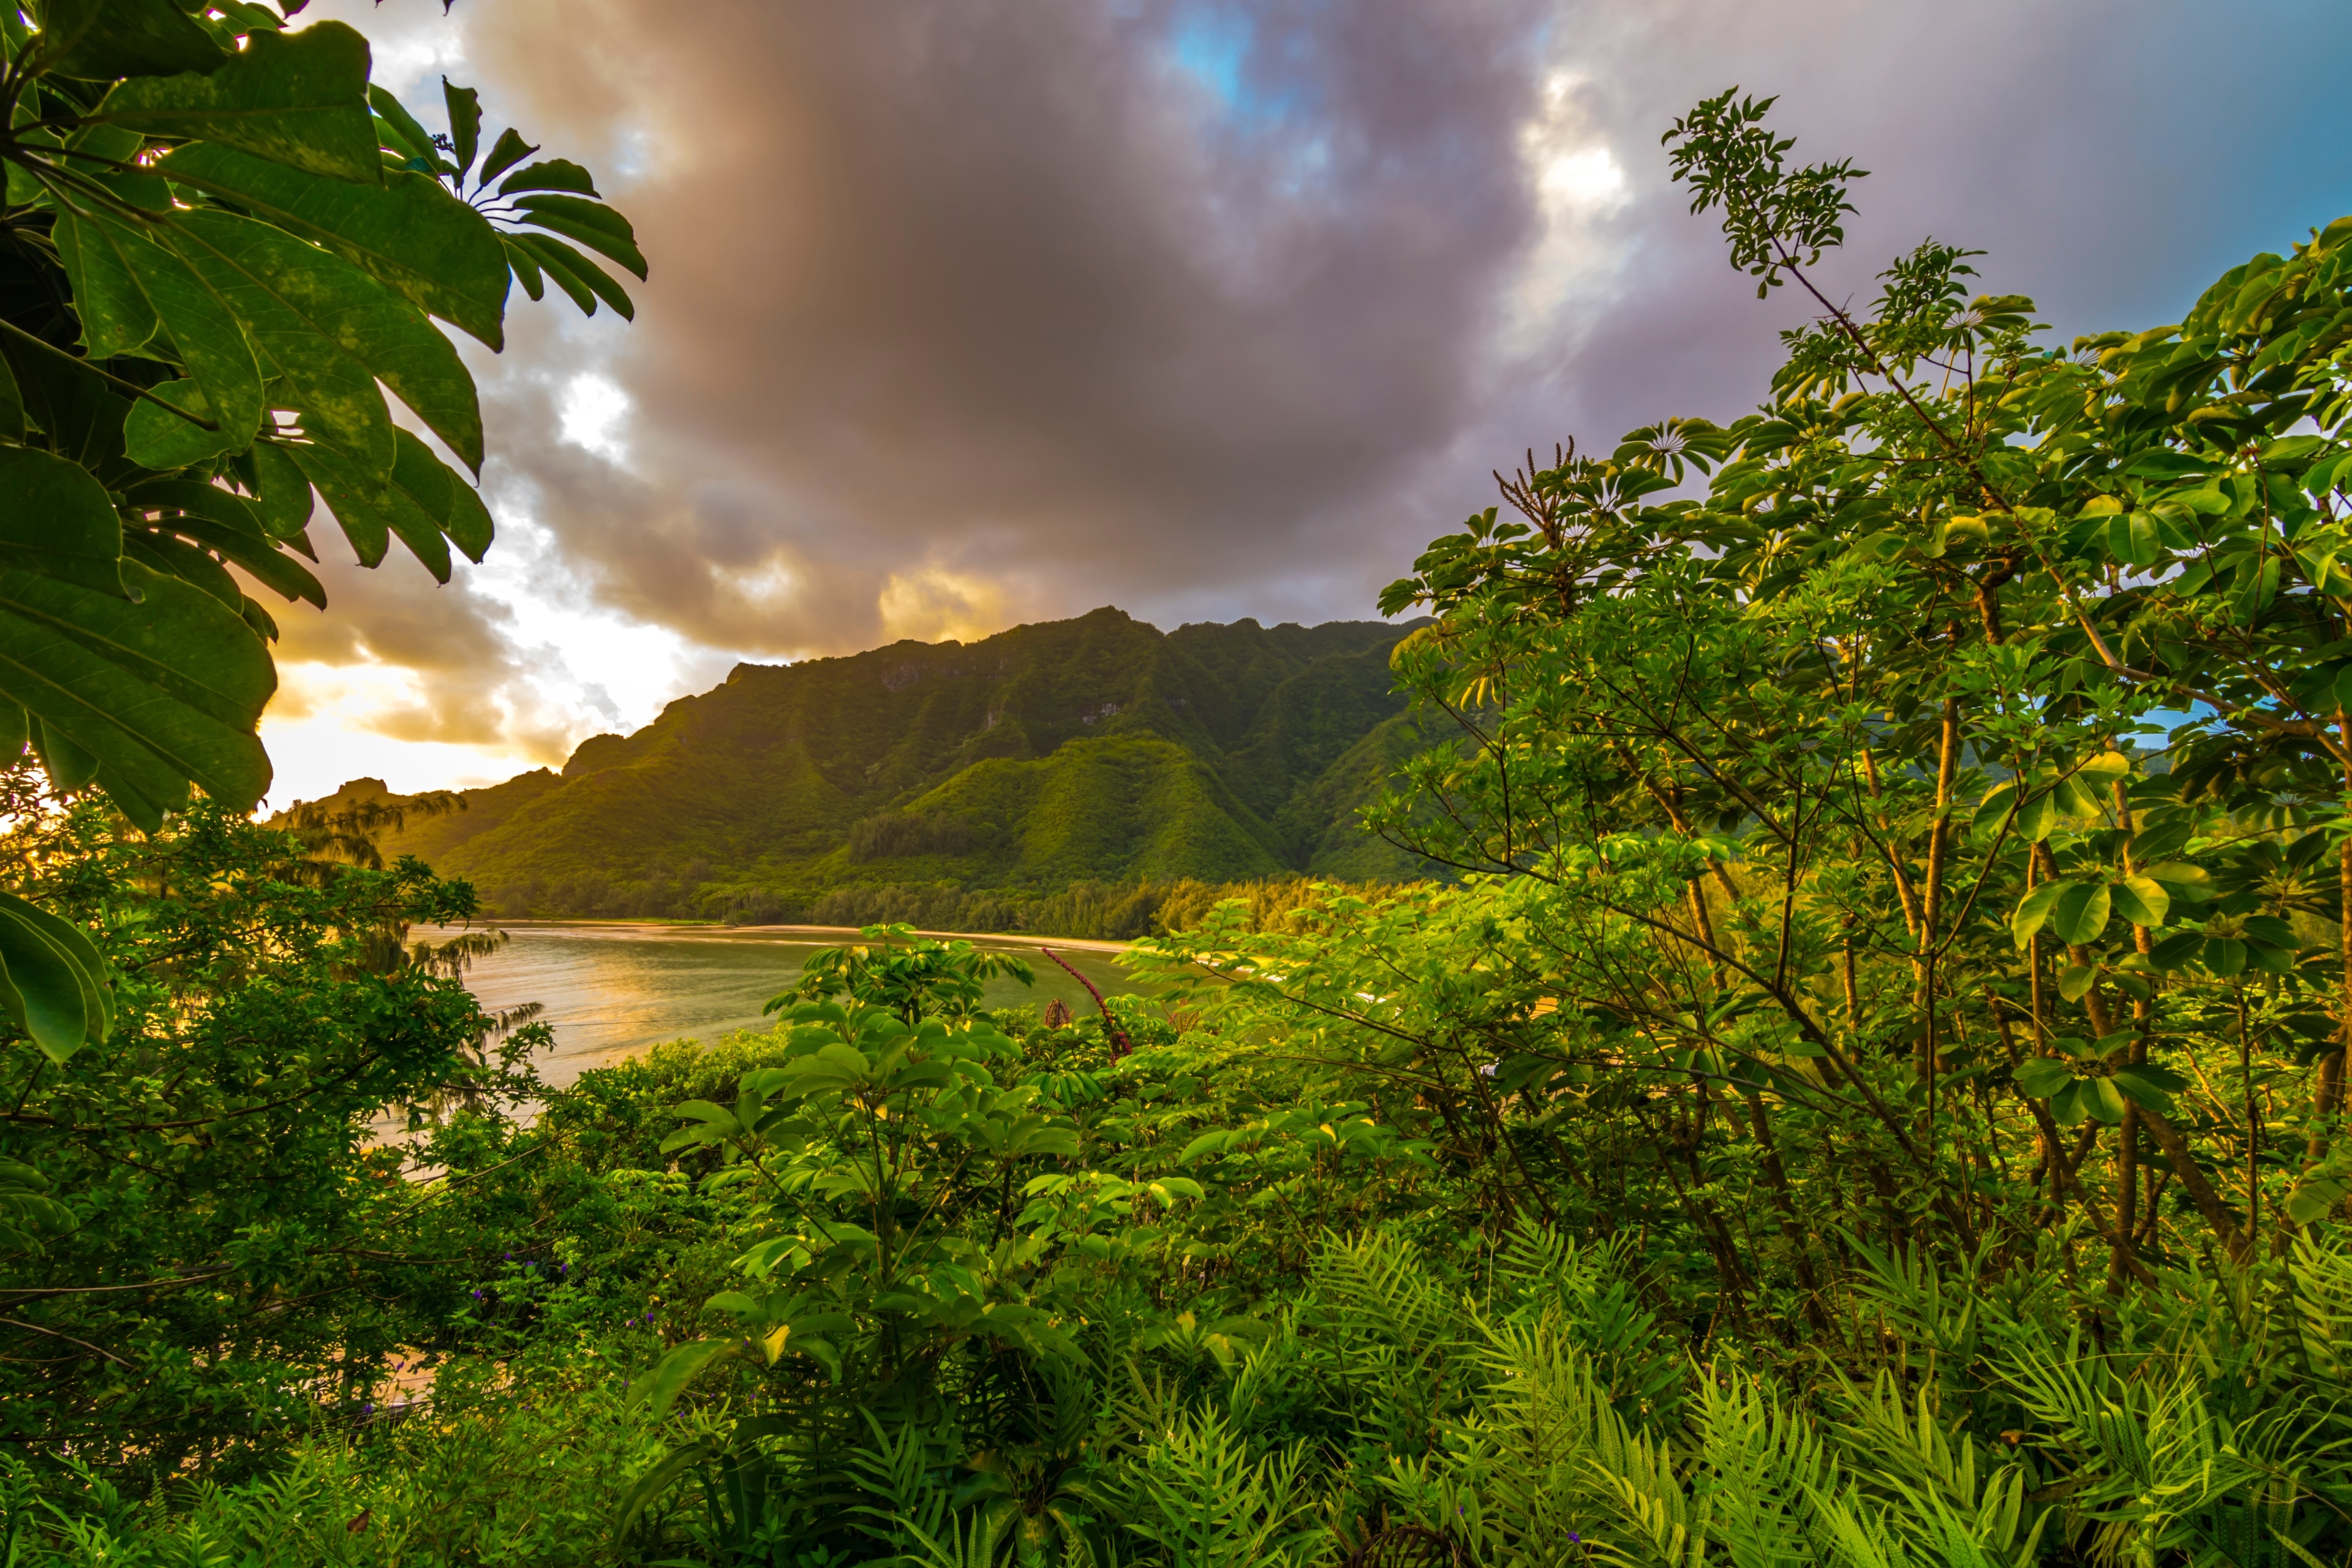 Maui, Hawaii, United States of America